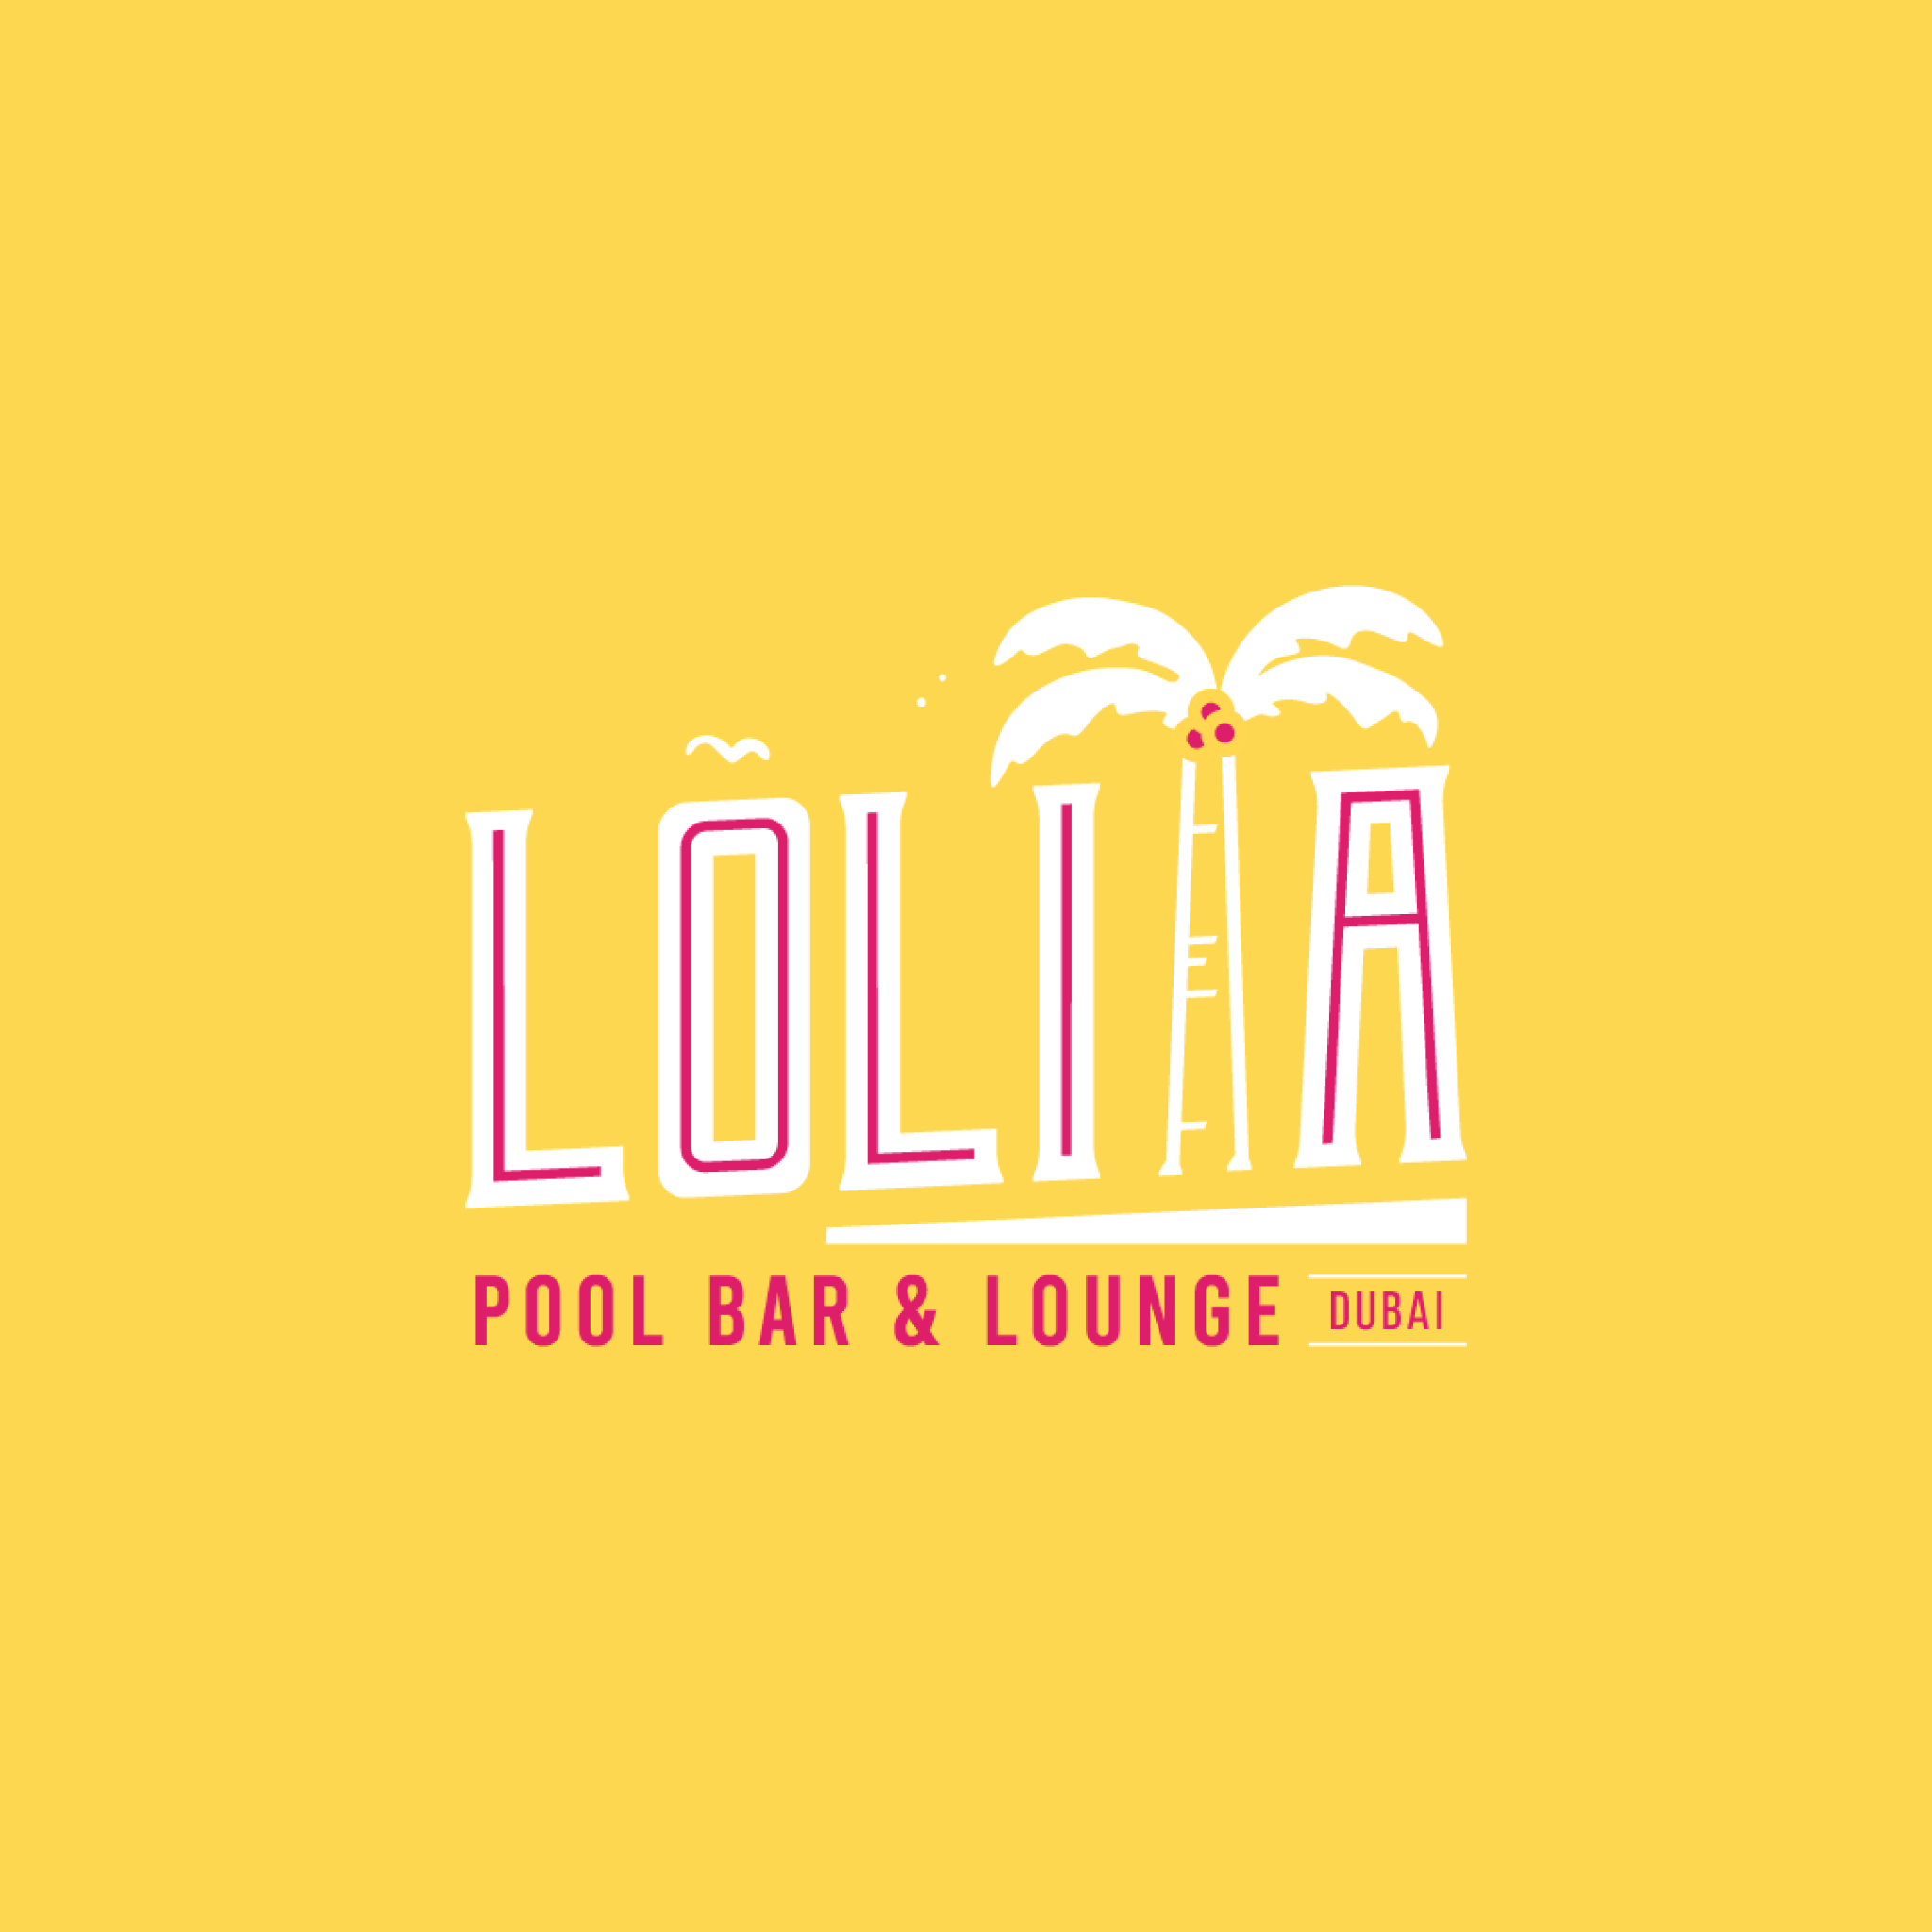 Lolita Pool Bar & Lounge